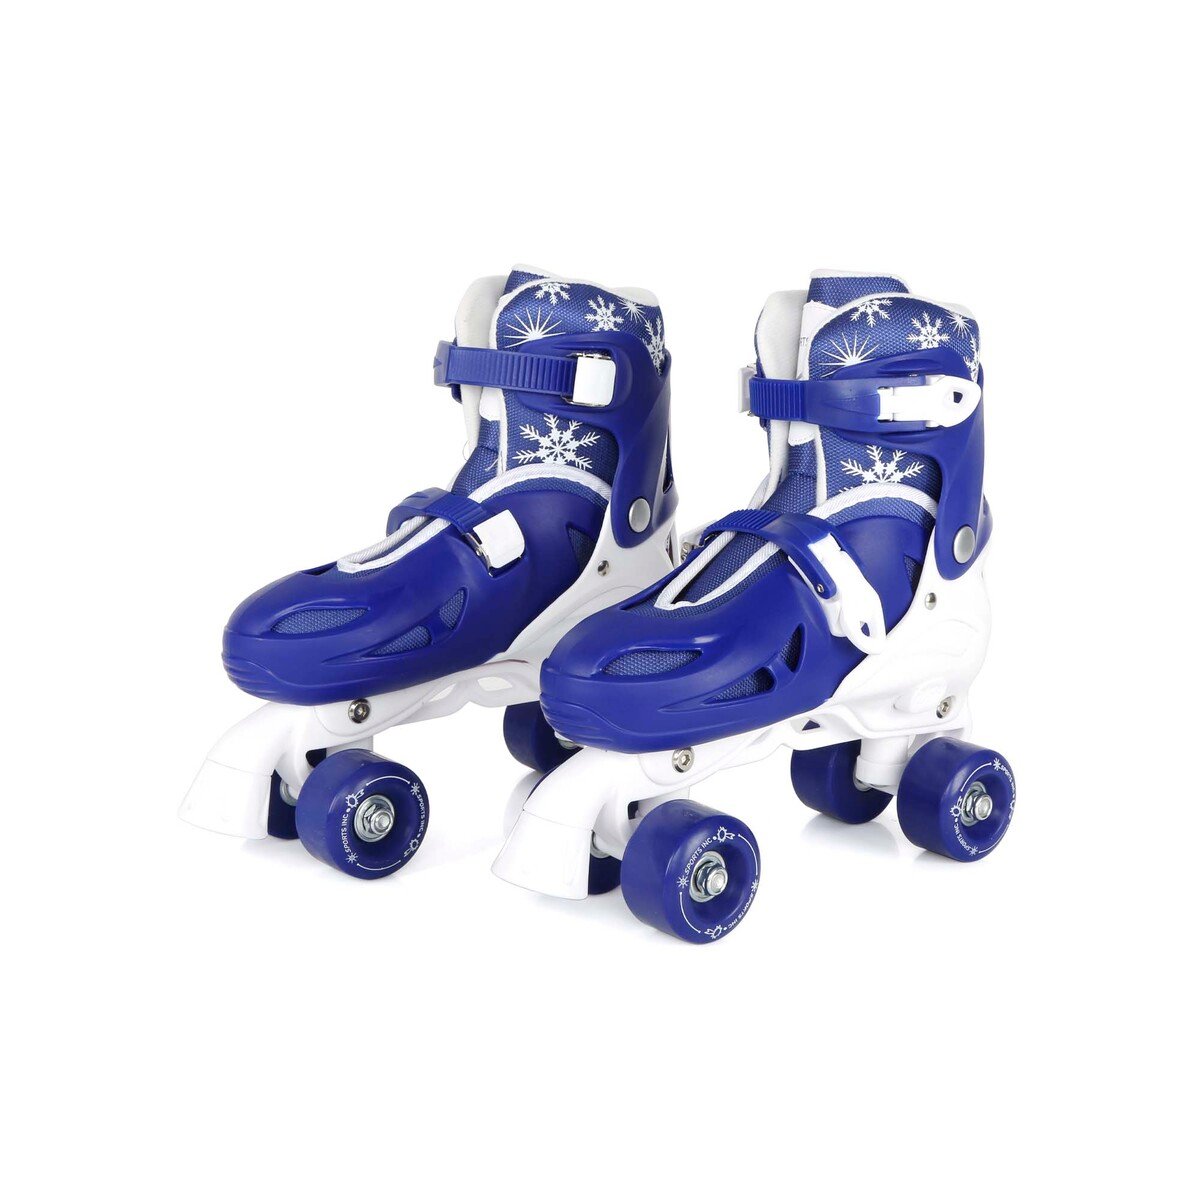 Sports Inc Skating Shoe Set, TE-725, Blue, Medium